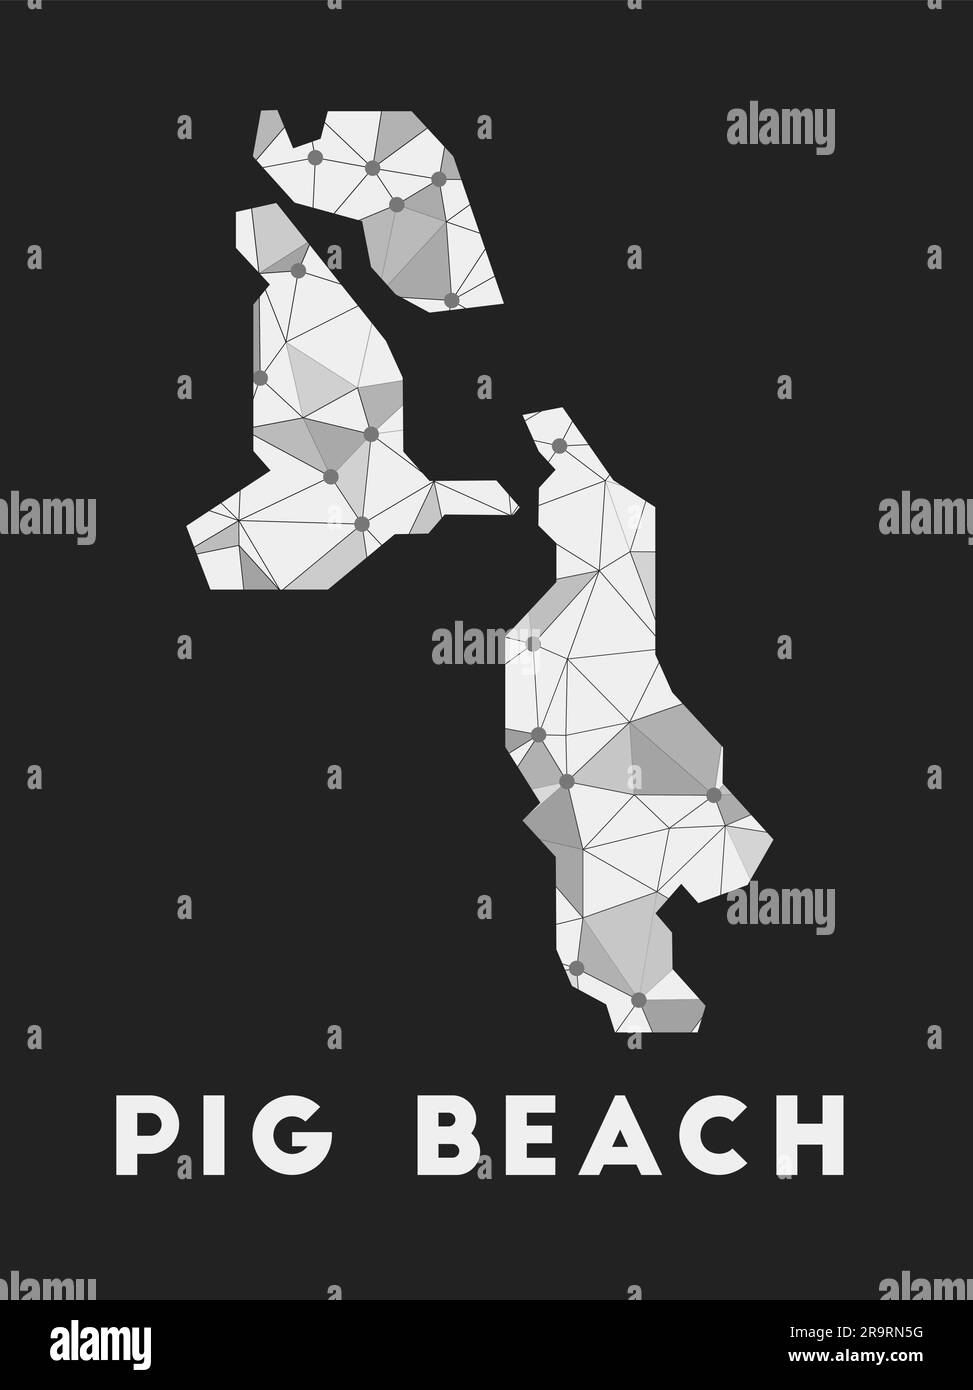 Pig Beach - communication network map of island. Pig Beach trendy geometric design on dark background. Technology, internet, network, telecommunicatio Stock Vector